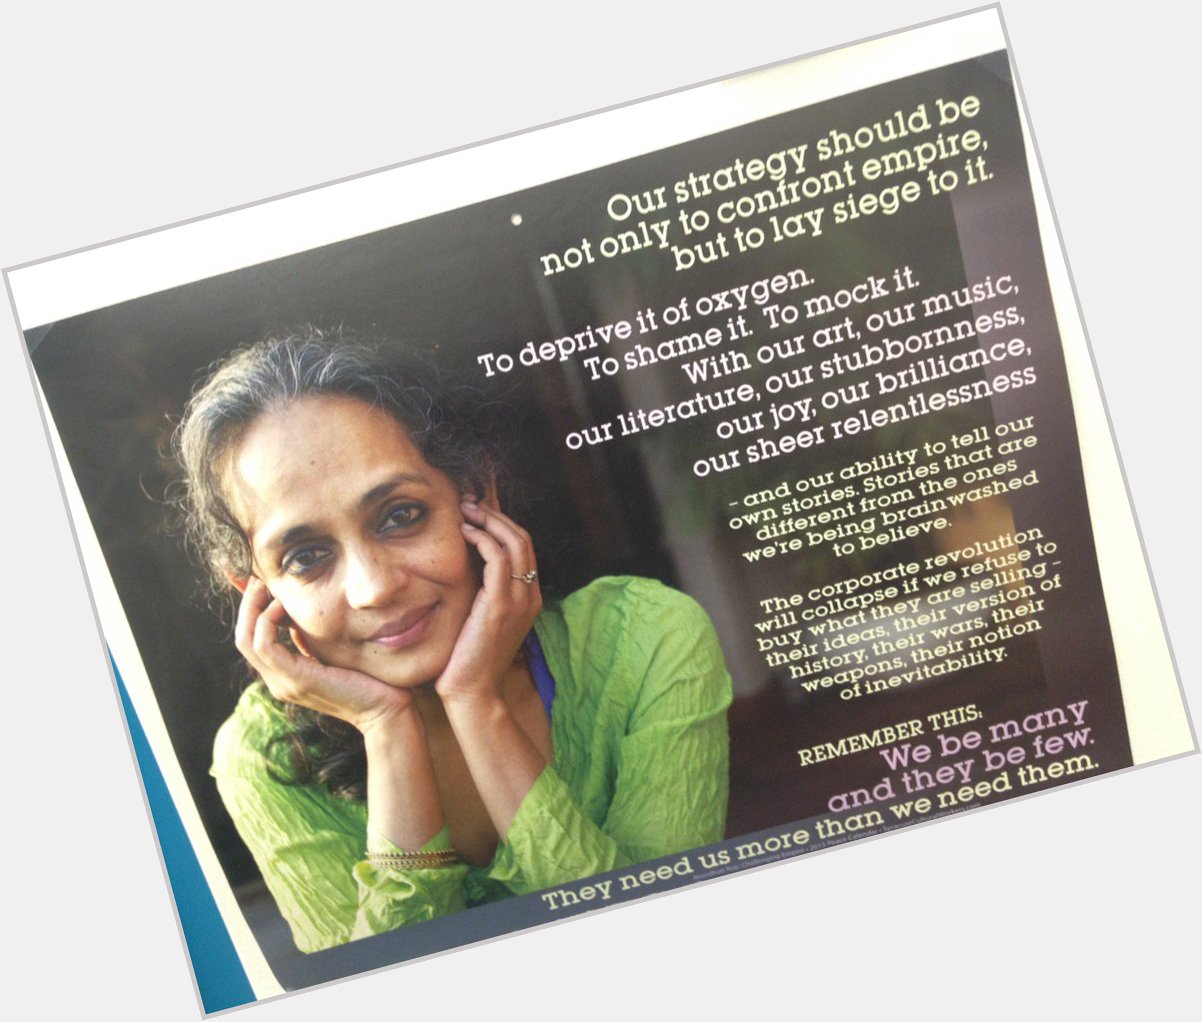 Happy birthday Arundhati Roy! Decided the door of my office needed more of her wisdom  